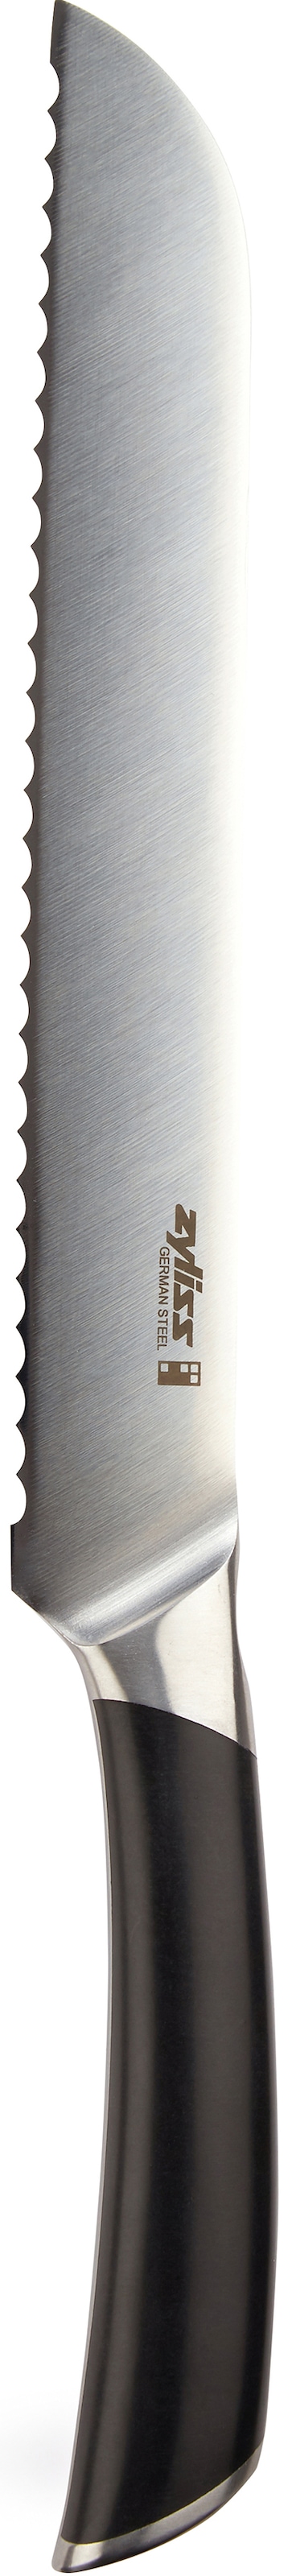 zyliss Brotmesser »Comfort Pro«, (1 tlg.), Deutscher Edelstahl langlebig ergonomisch geformt